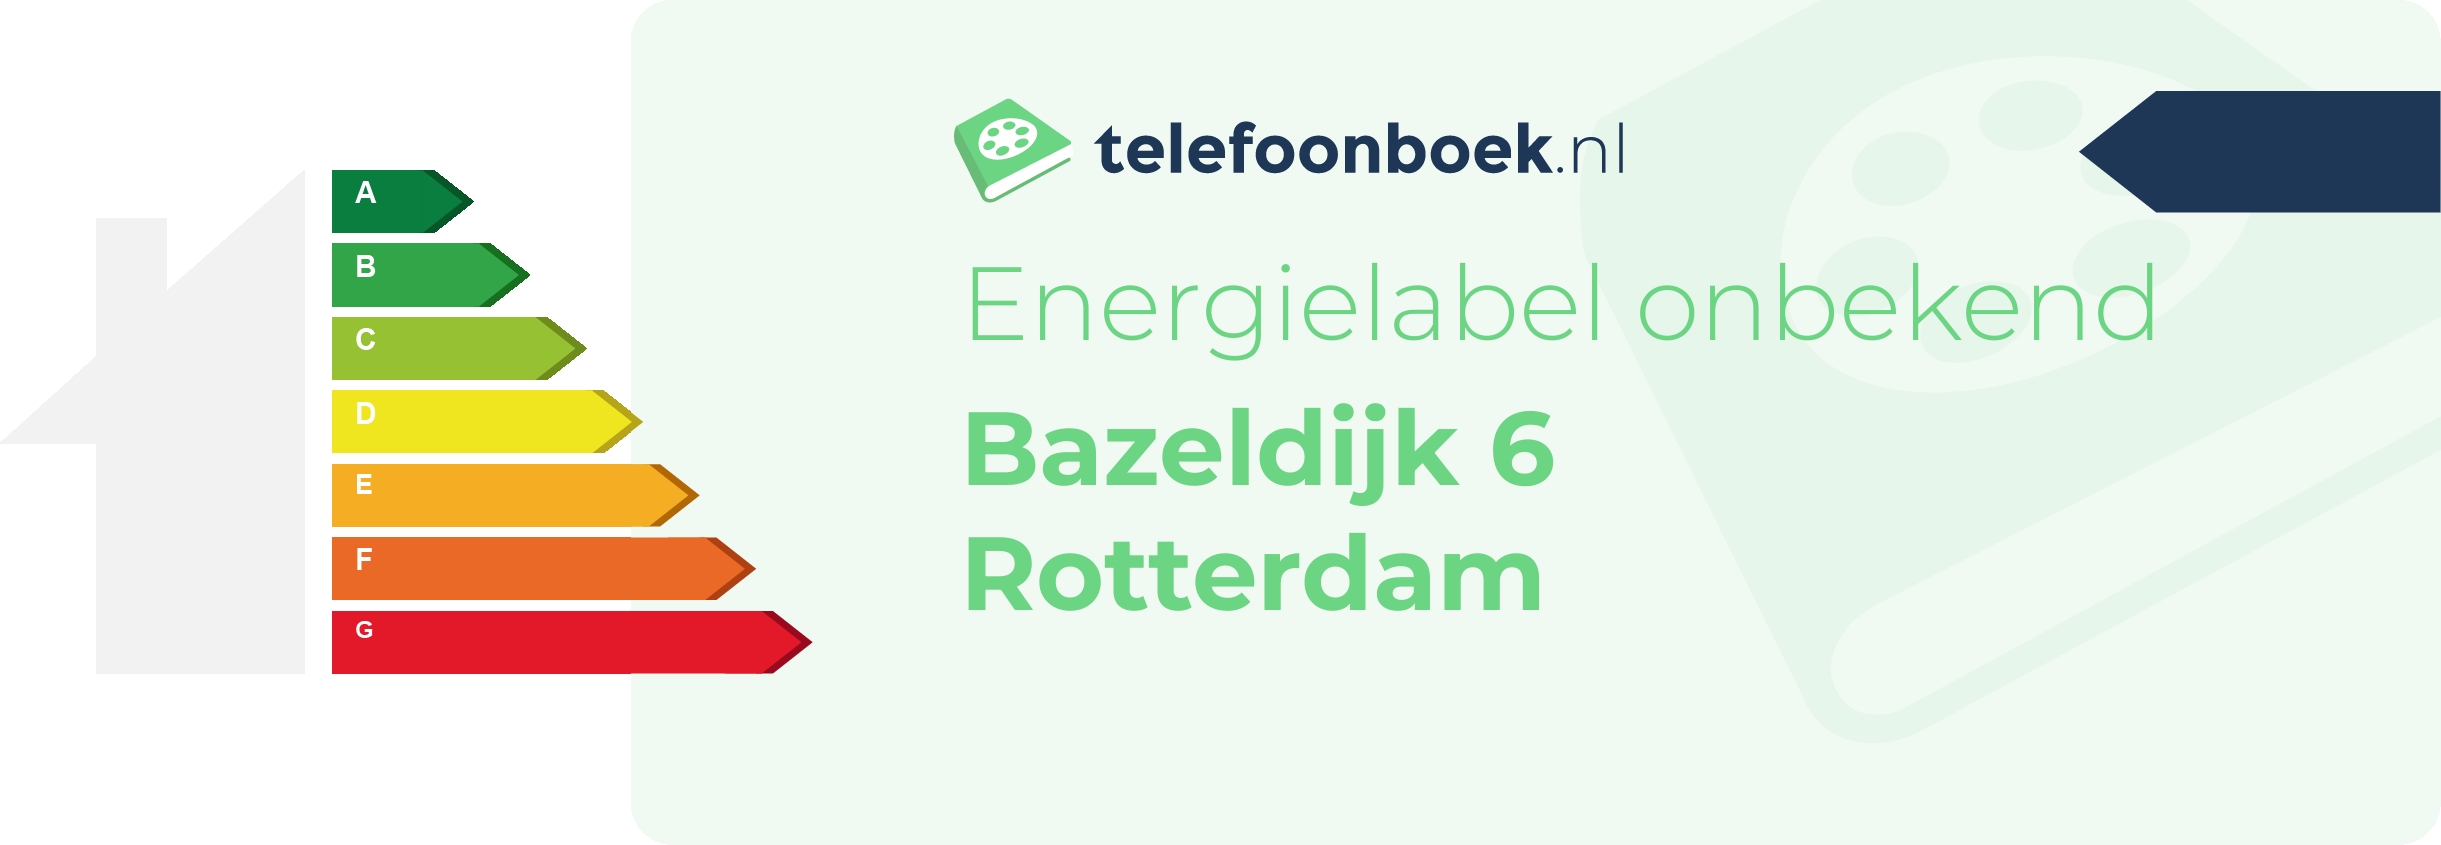 Energielabel Bazeldijk 6 Rotterdam